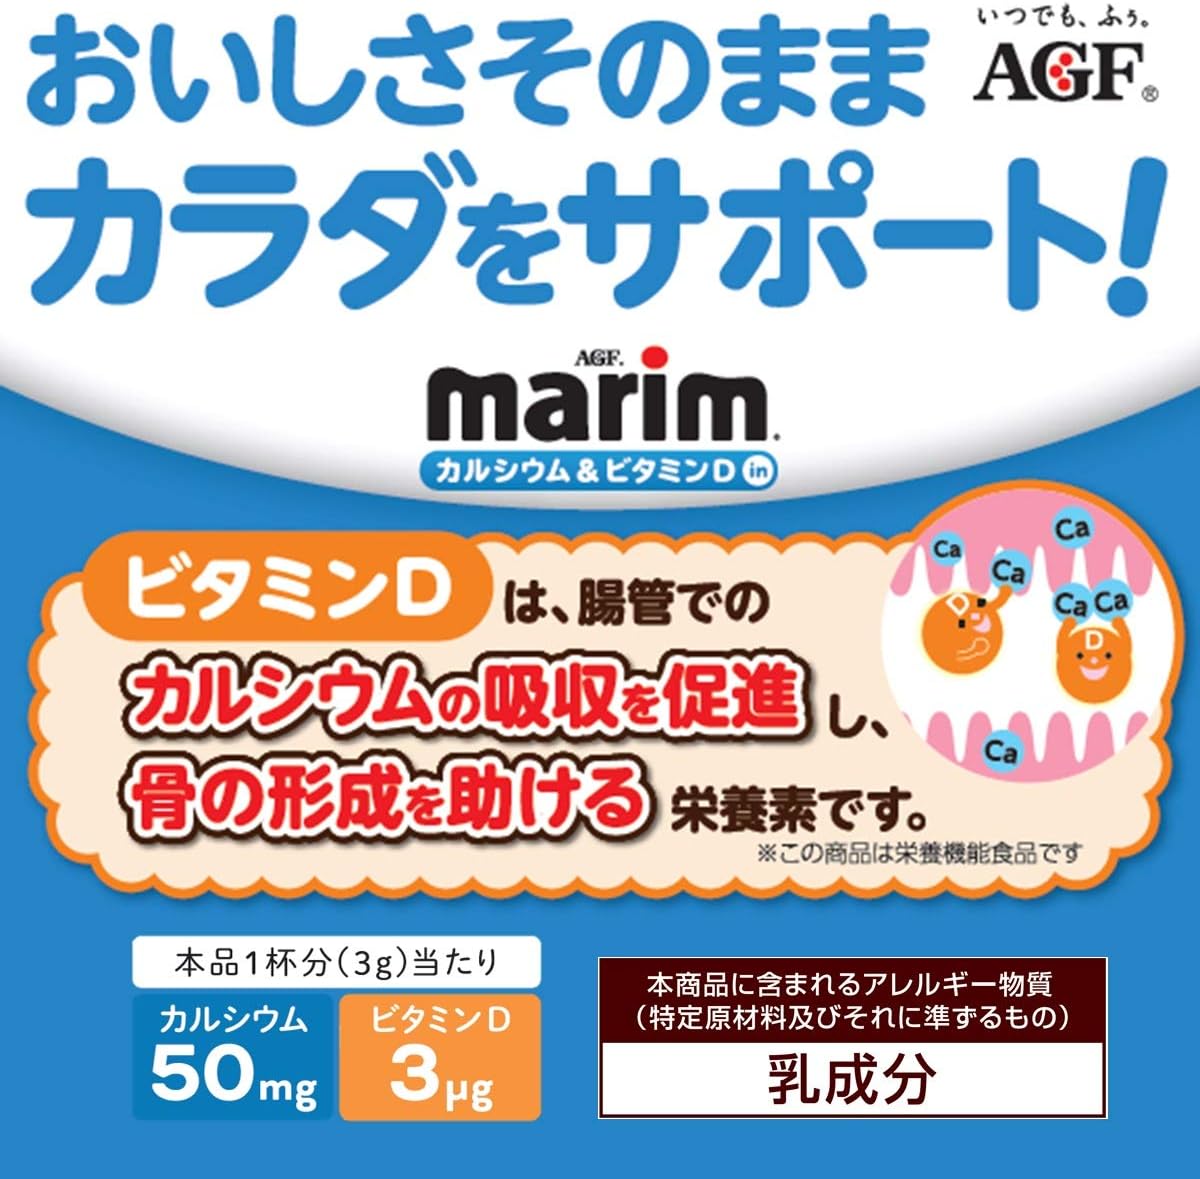 AGF(e-ji-ef) Marie m calcium &amp; vitamin D entering sack 200g×4 sack [ coffee mill k] refilling 4 sack 